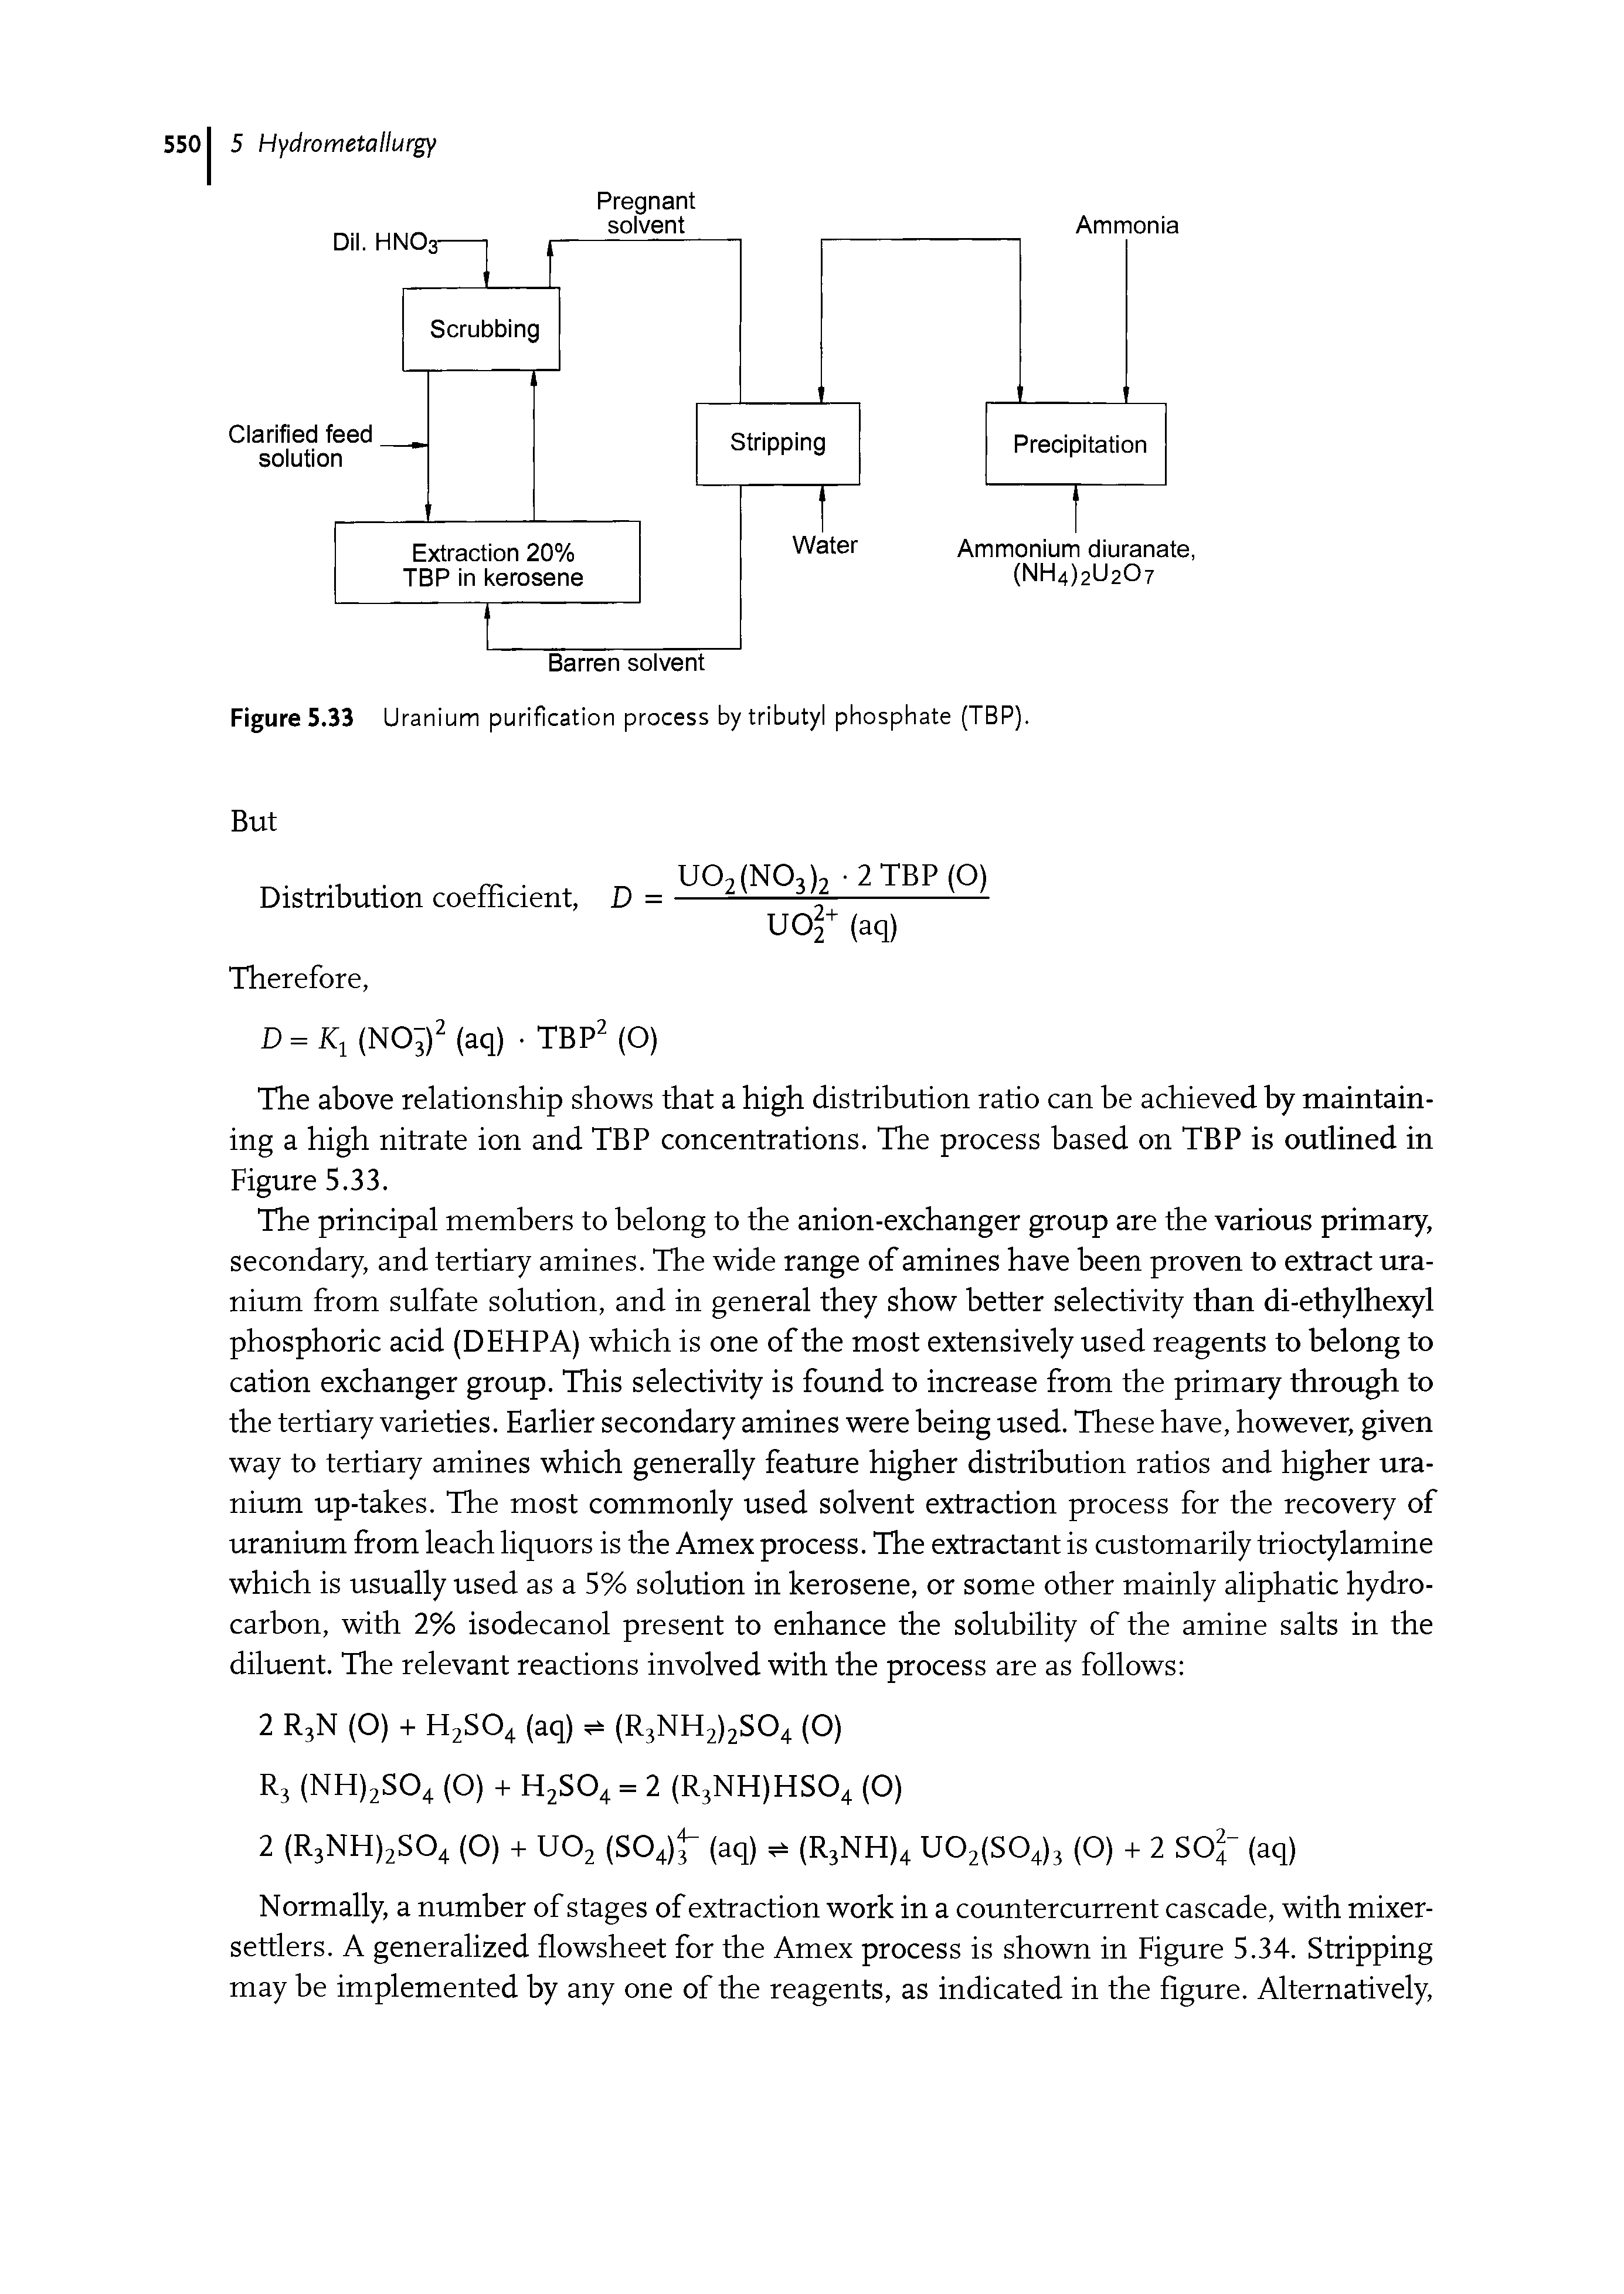 Figure 5.33 Uranium purification process by tributyl phosphate (TBP).